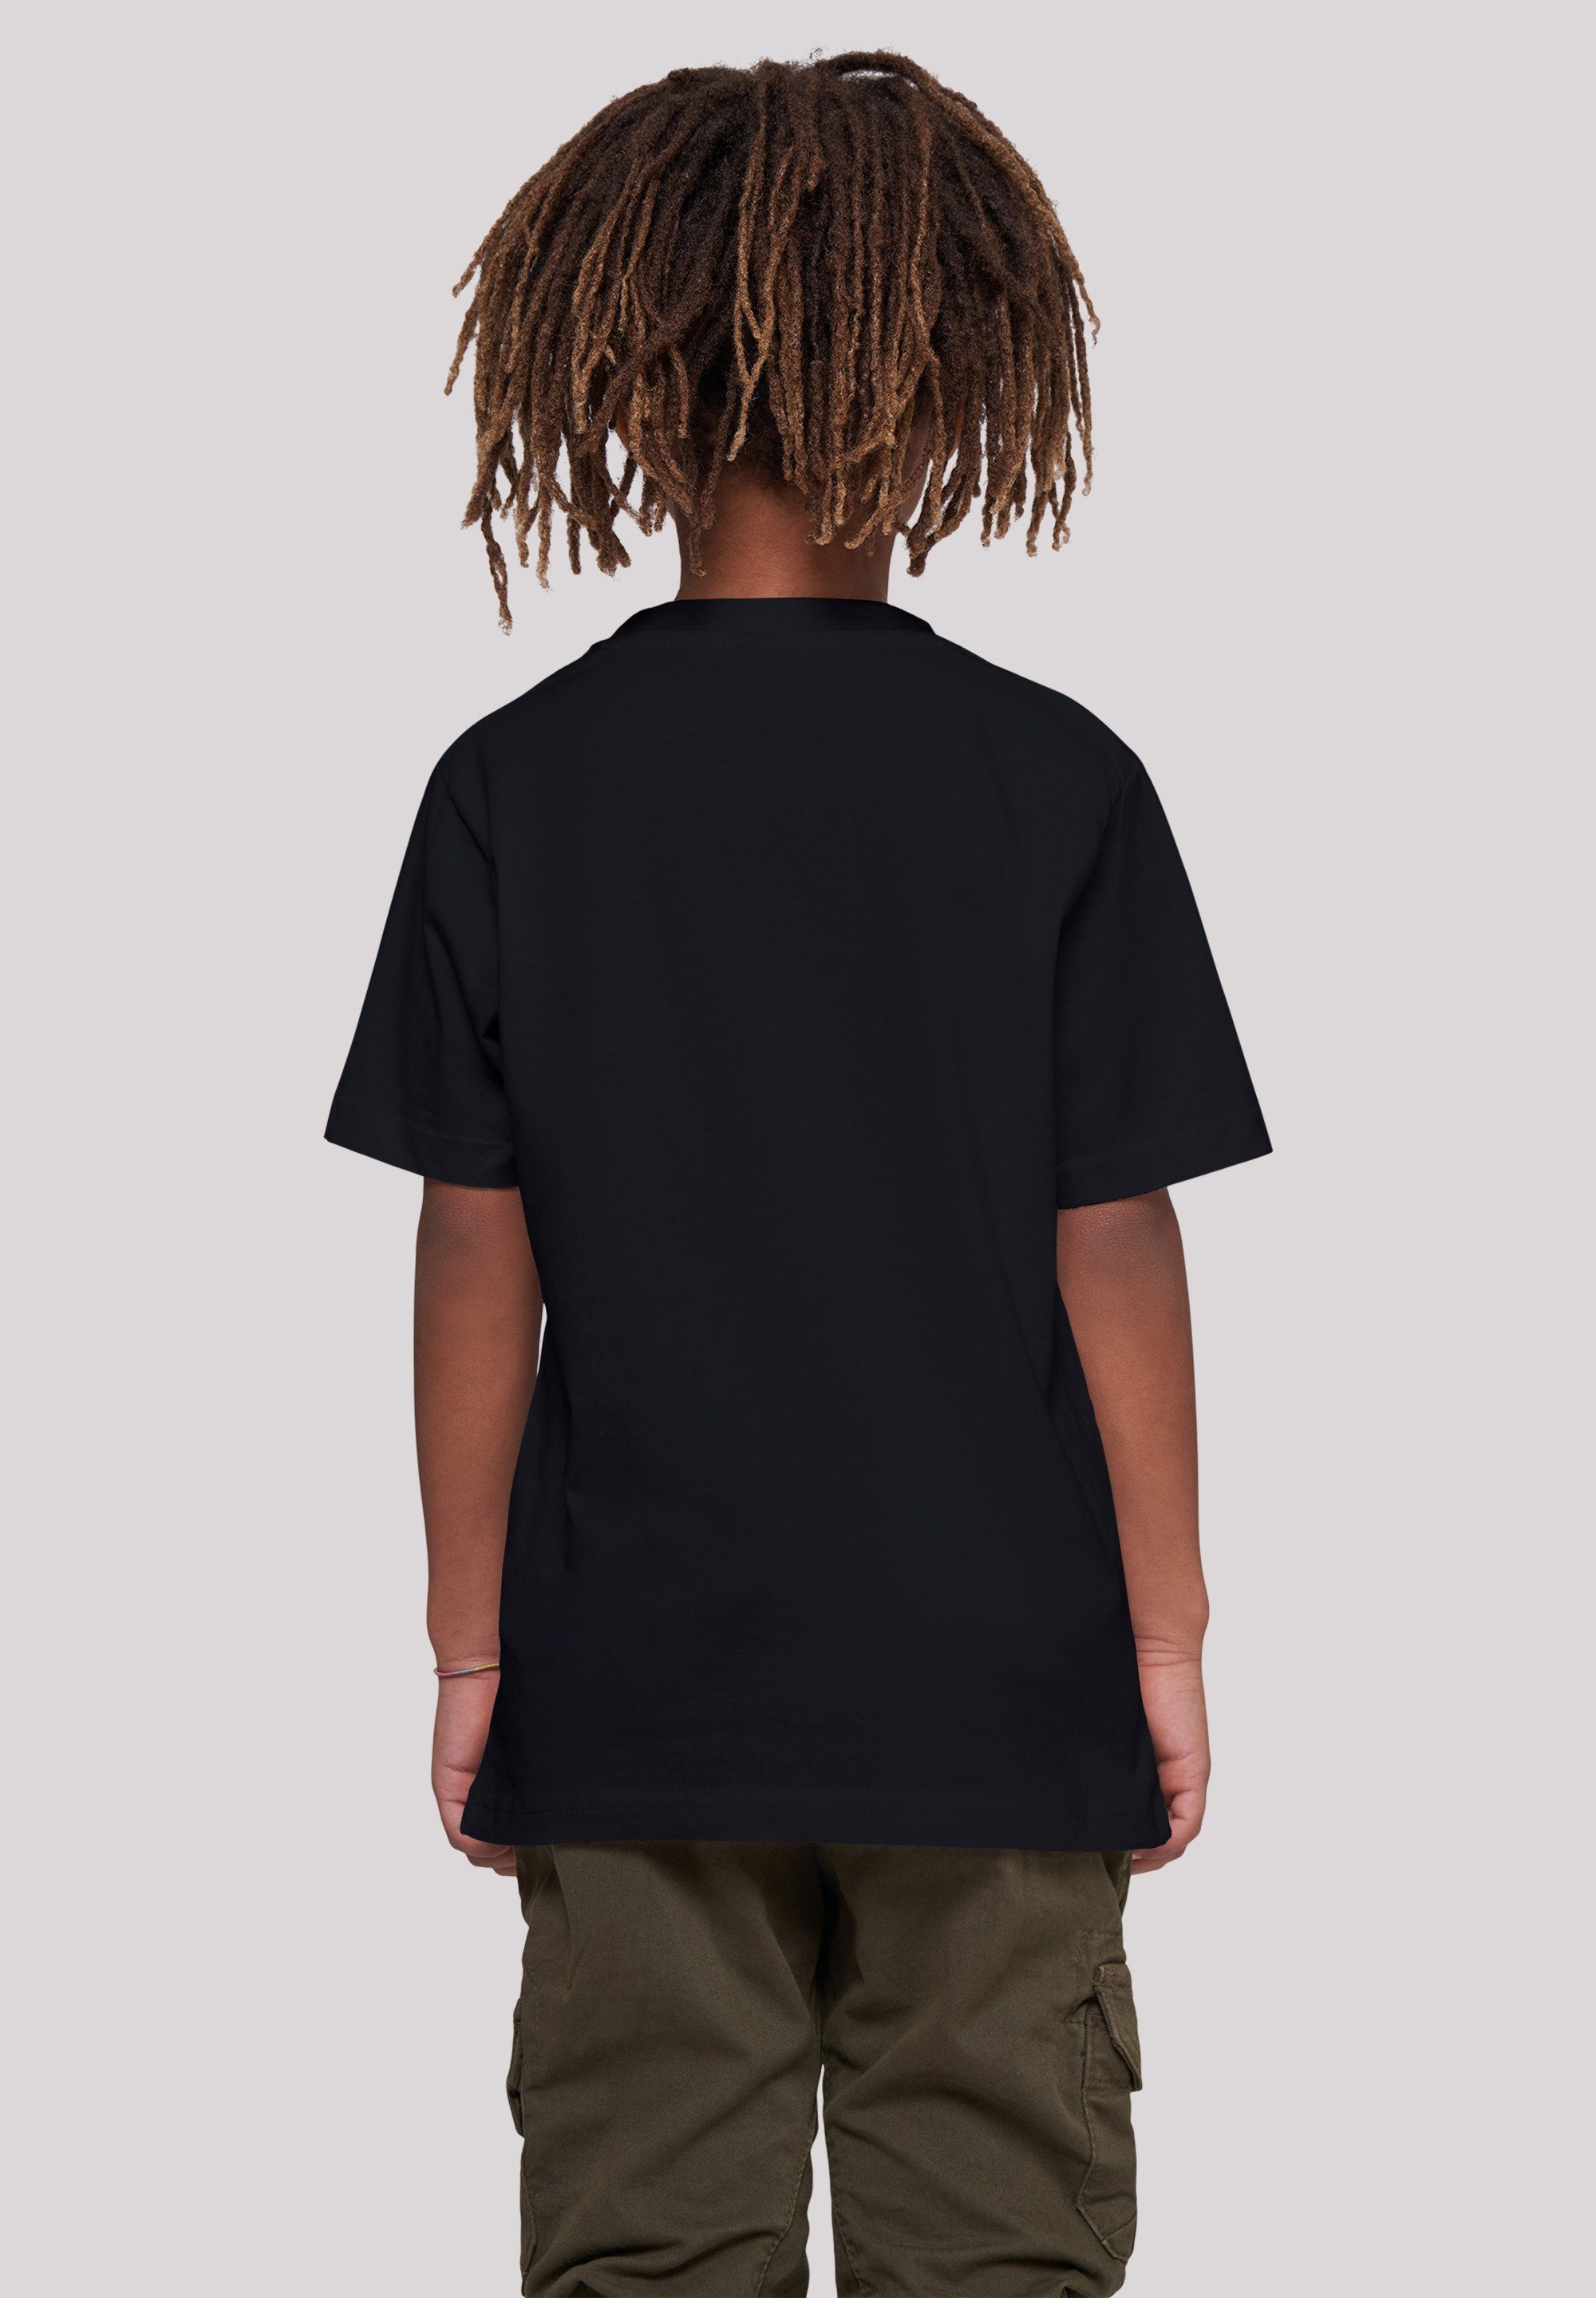 F4NT4STIC T-Shirt PARIS SKYLINE TEE UNISEX Print schwarz